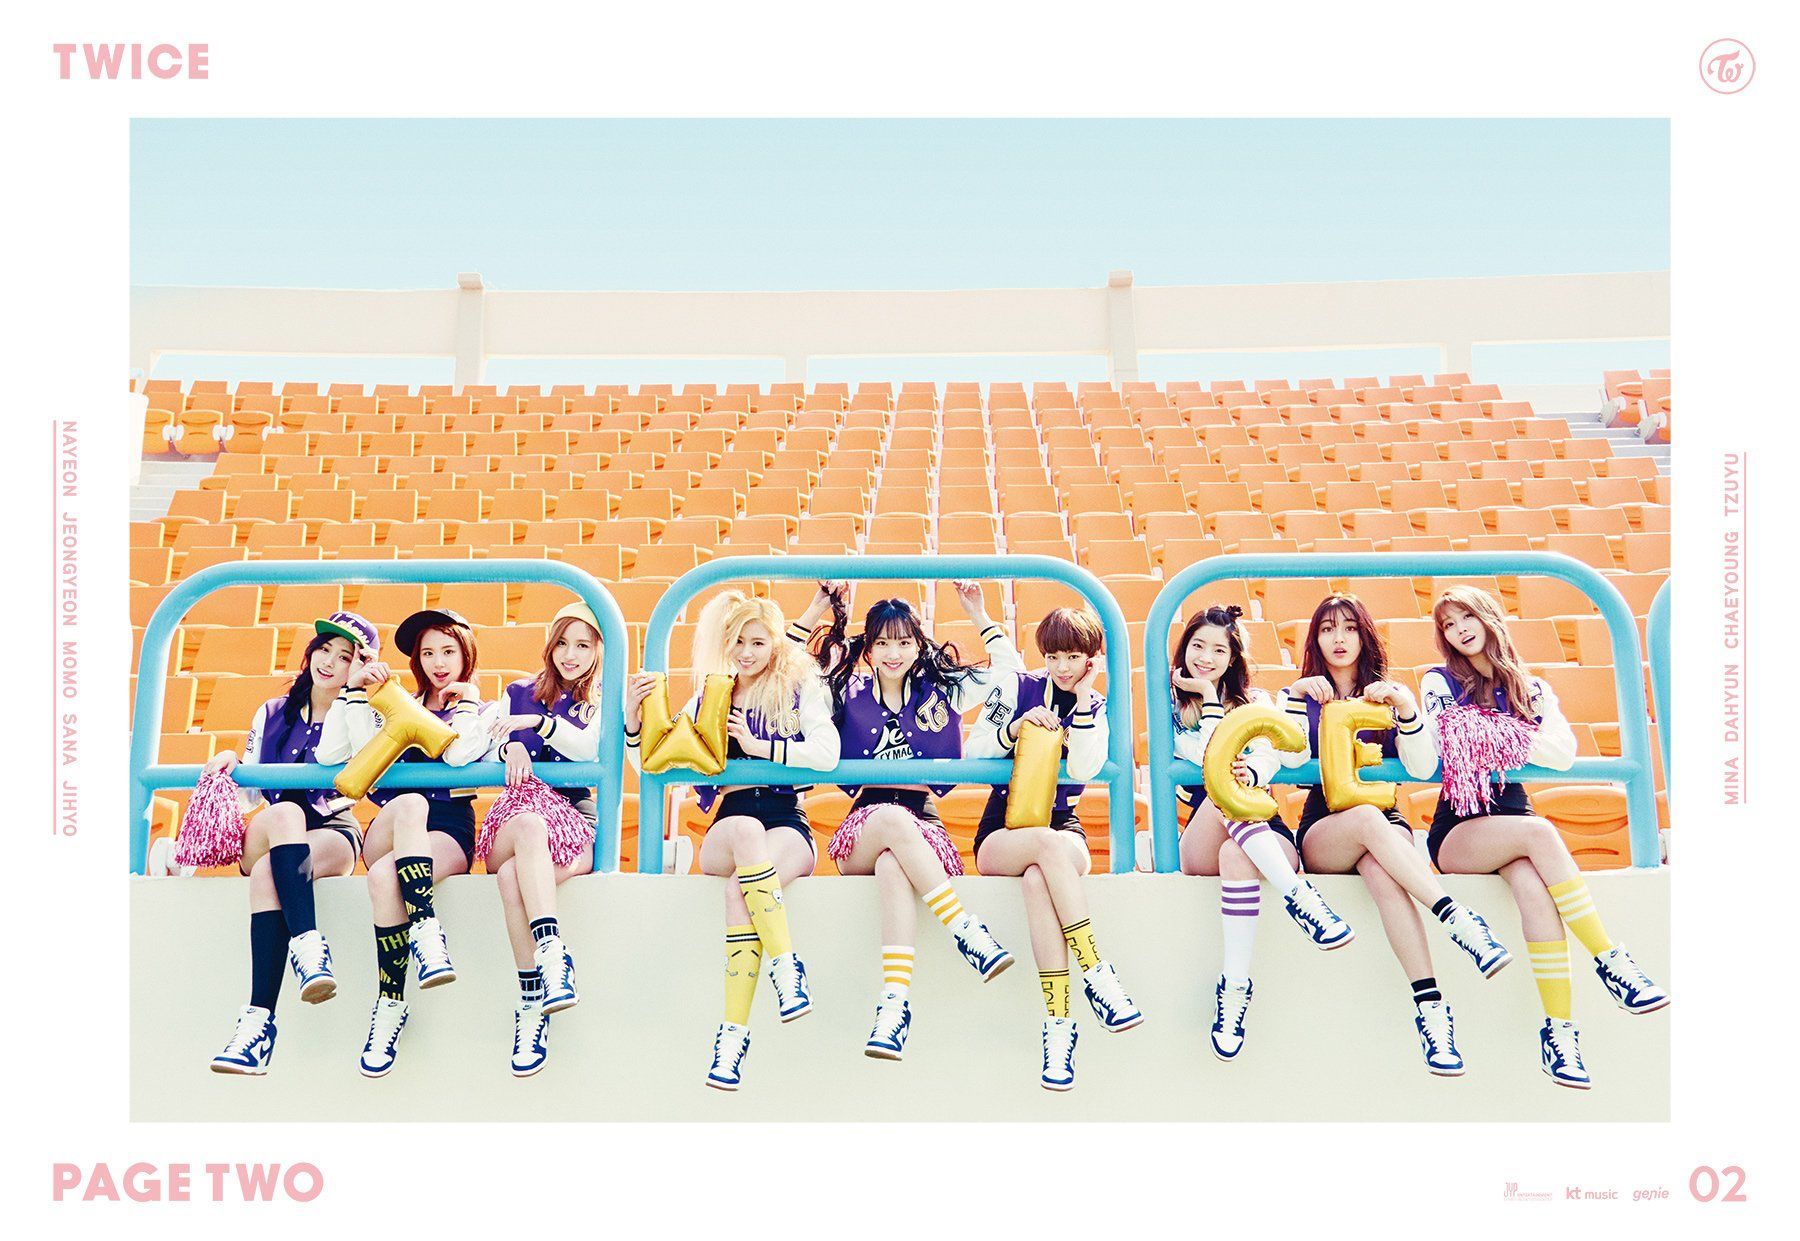 Twice 'CHEER UP' Concept Photo. Cheer up, Twice album, Kpop